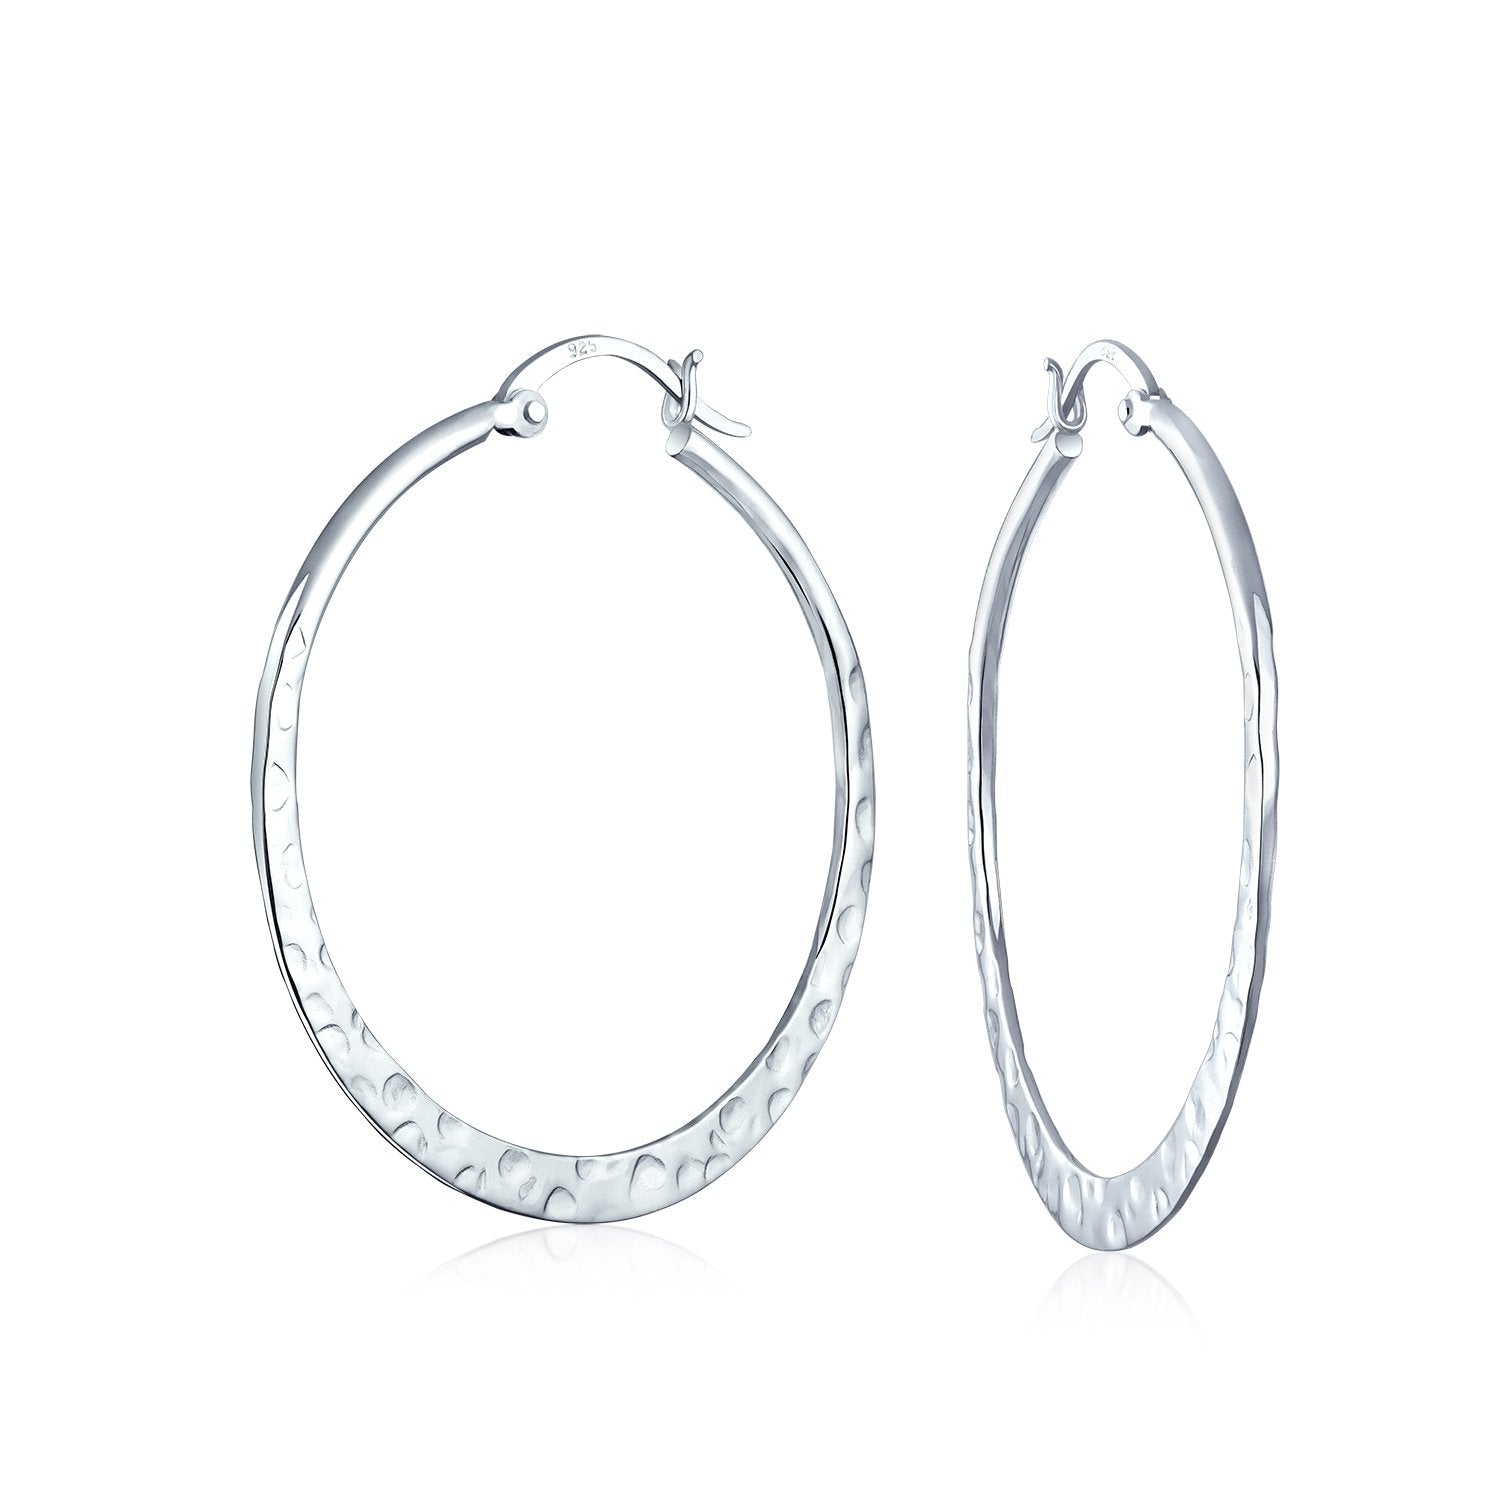 Boho Hammered Flat Hoop Earrings 925 Sterling Silver 1 5 Inch Dia - Joyeria Lady